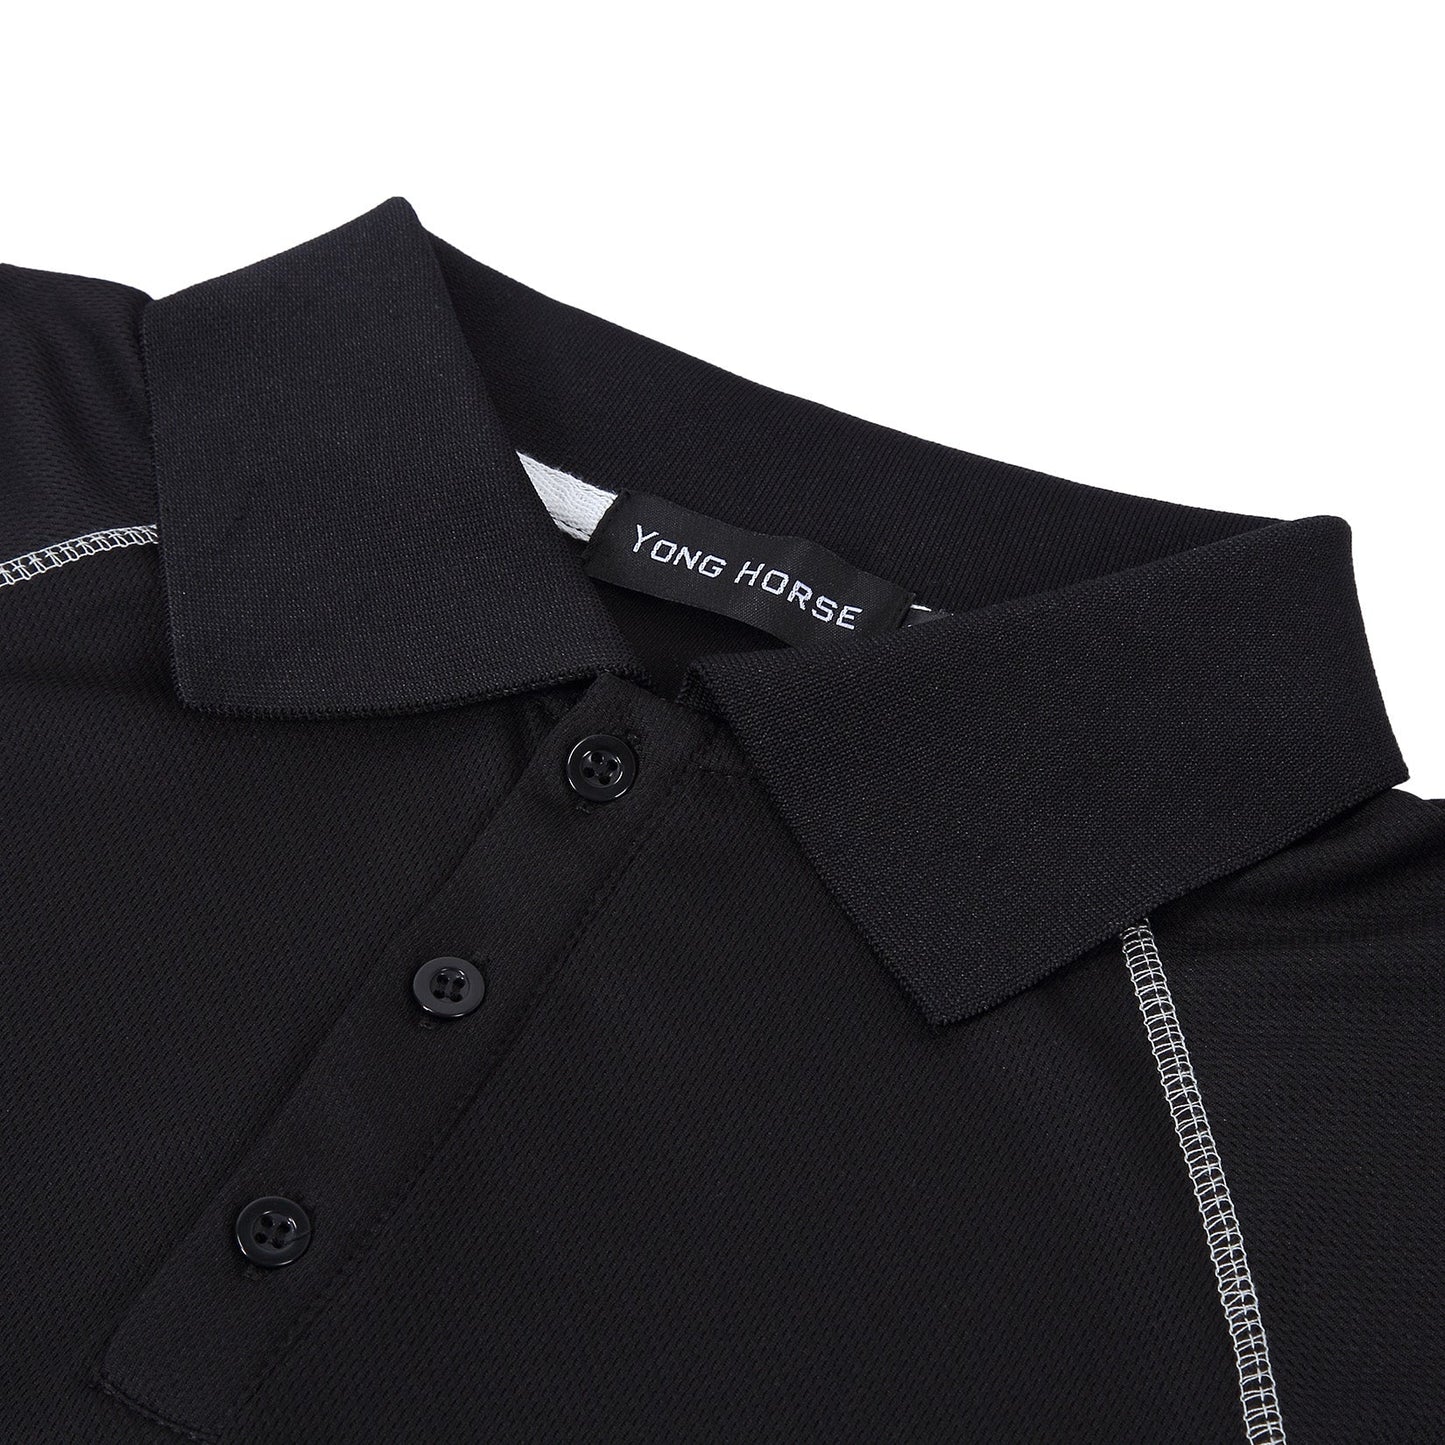 YESFASHION Men's Golf Polo Shirts Short Sleeve Collared T Shirt Black